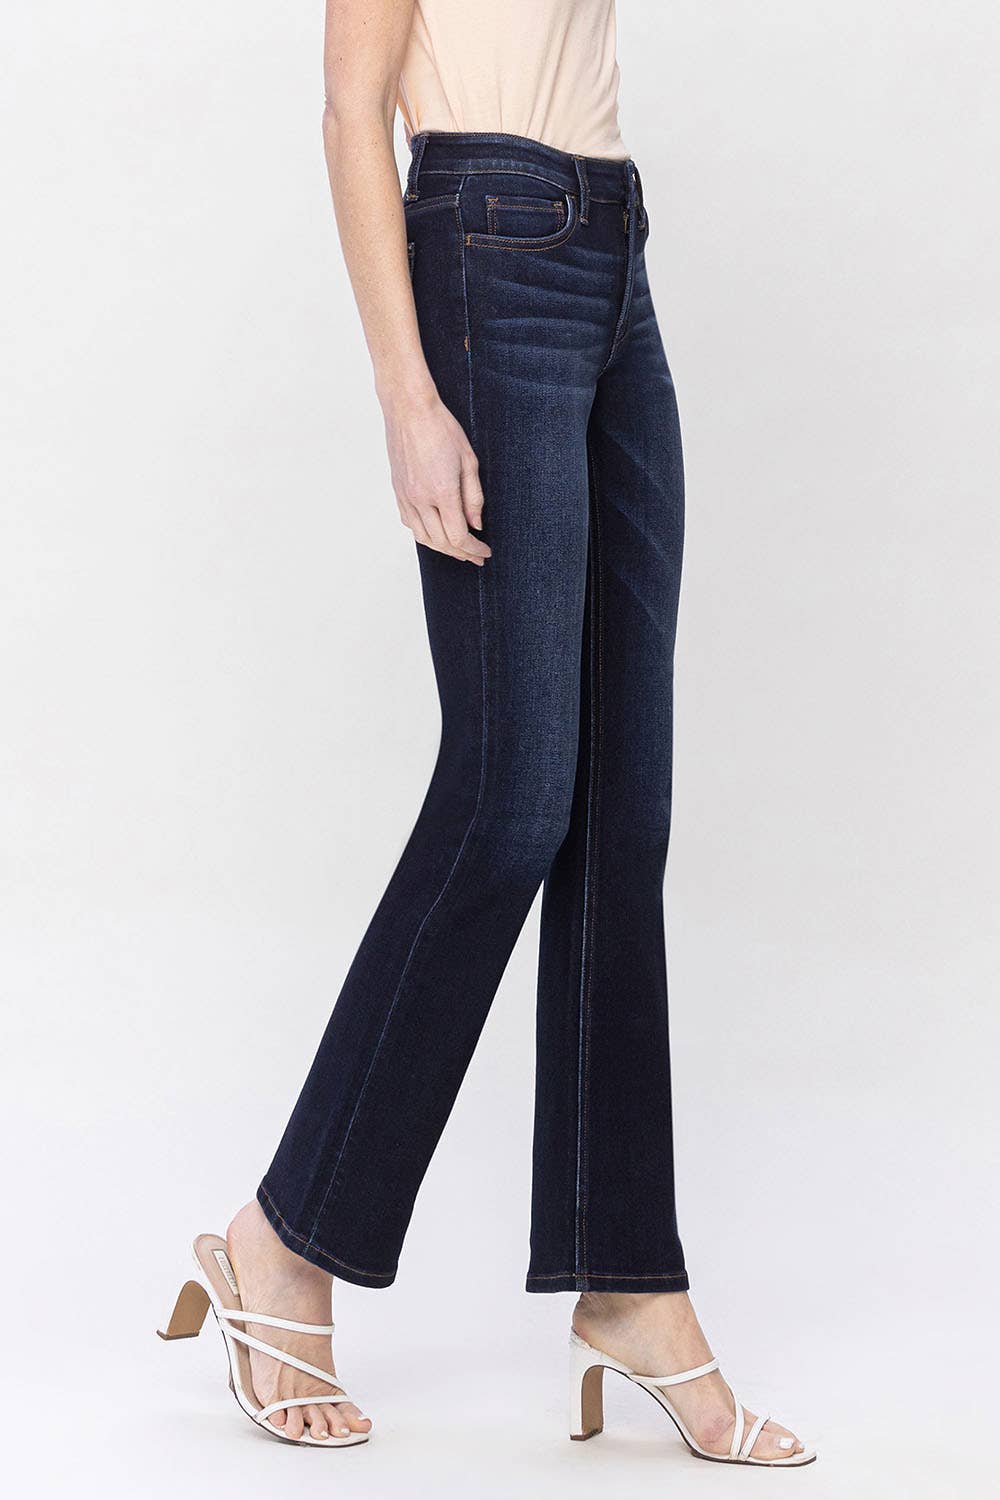 Vervet | Jubilee Mid-Rise Bootcut Jeans